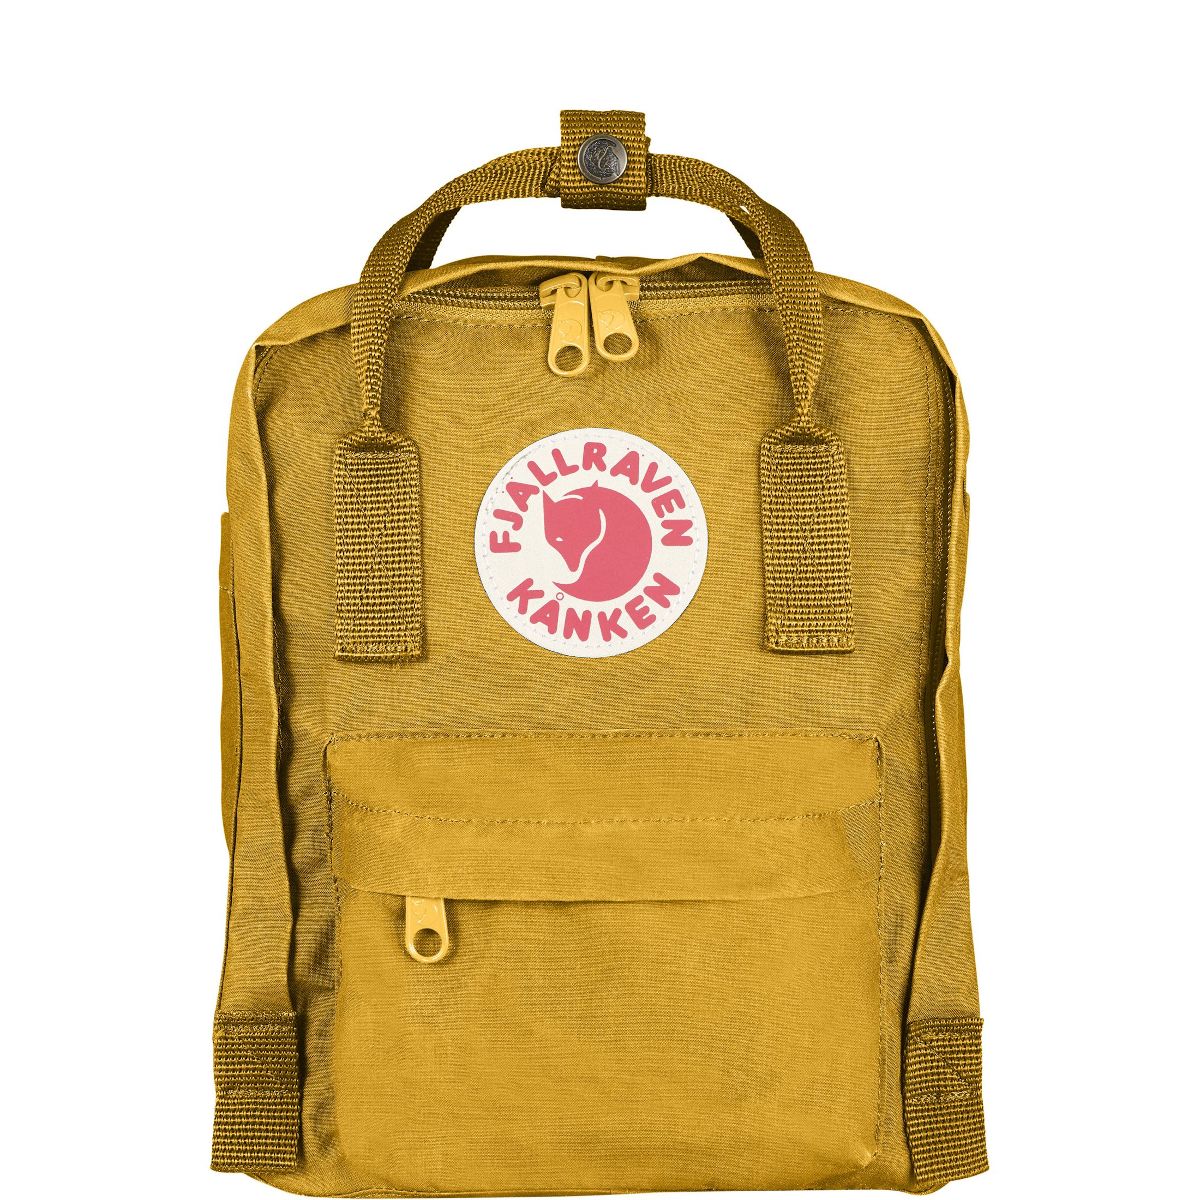 Precies Uluru Laptop Kanken Mini Backpack from Fjallraven